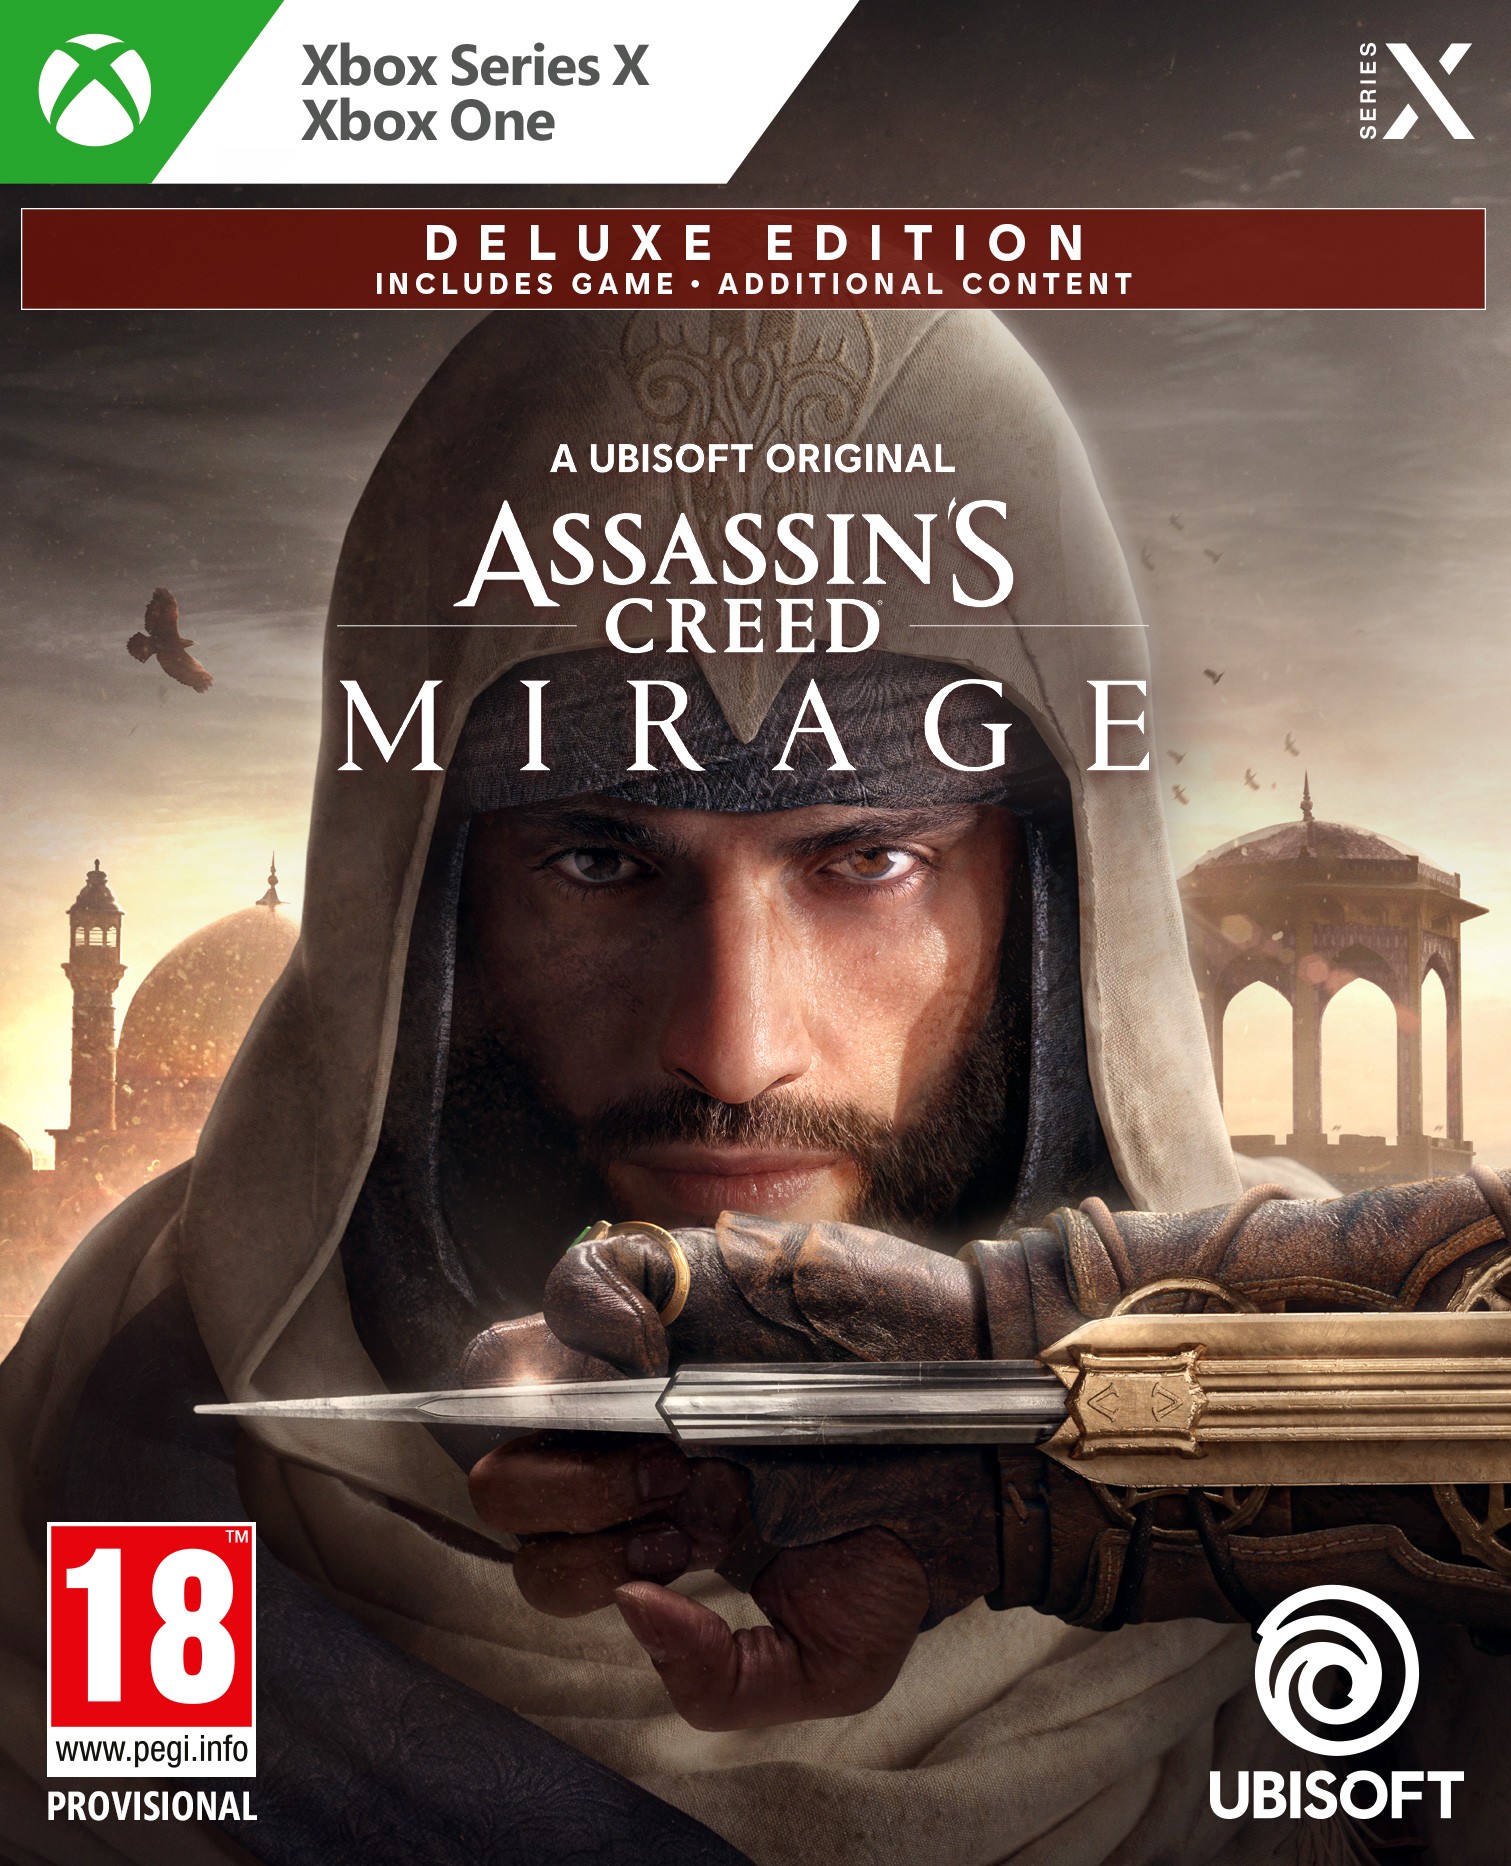 Assassins Creed Mirage Deluxe Edition + Preorder Bonus